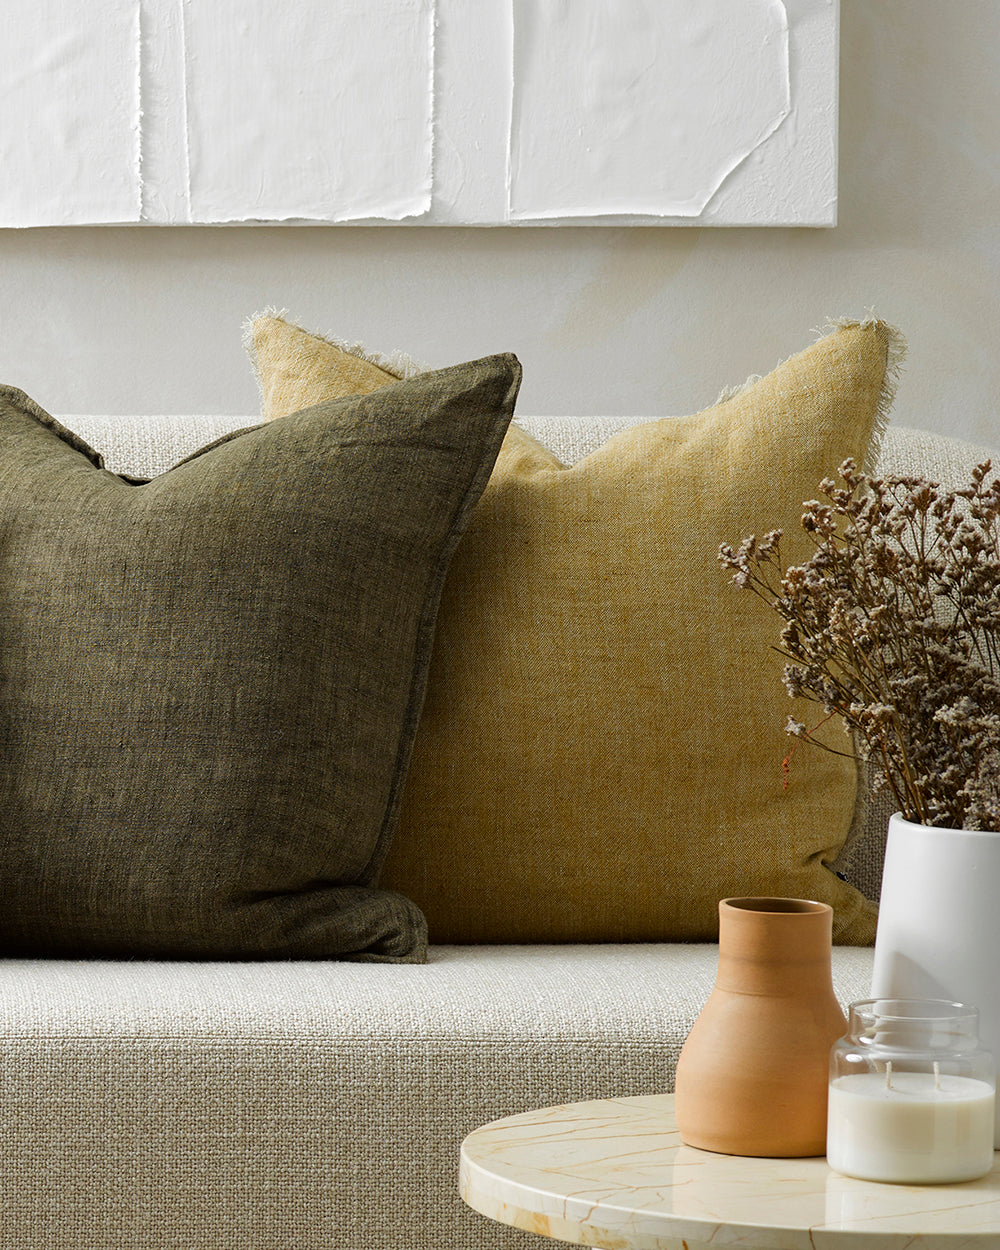 Keaton Linen cushion in wheat with khaki cushion on white sofaa